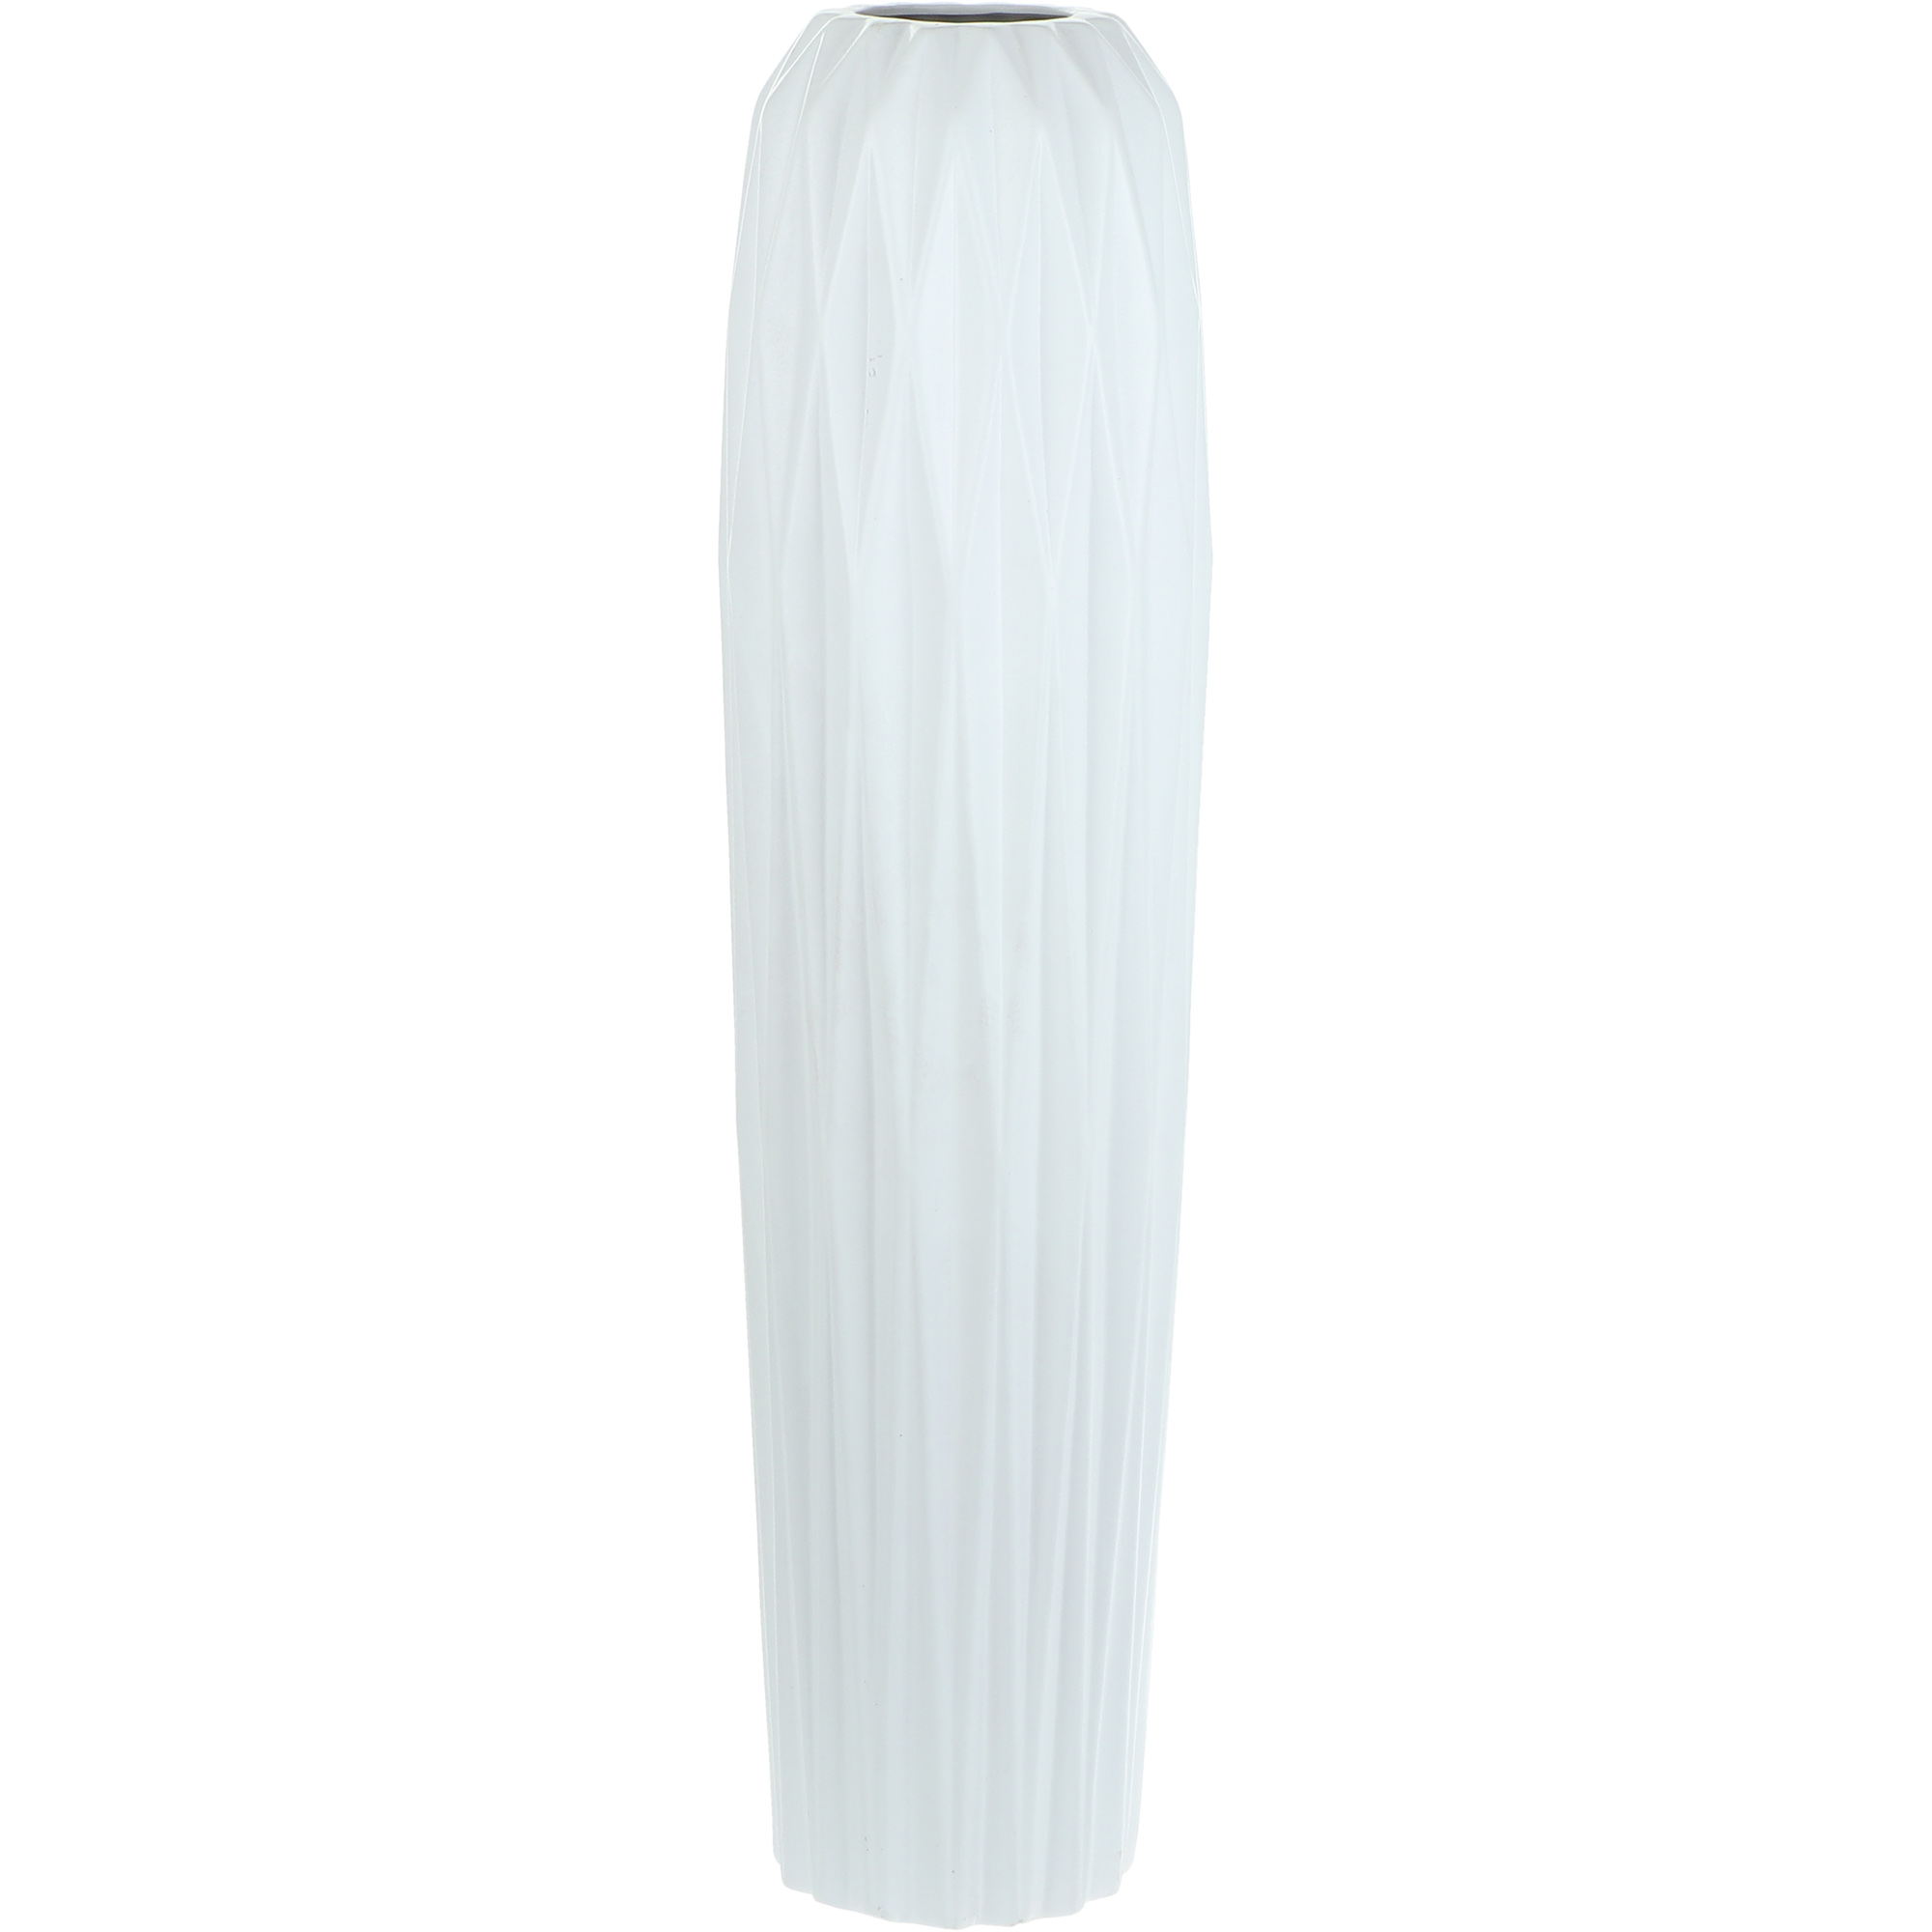 Ваза Ad trend Ceramic белая 18х75,5 см